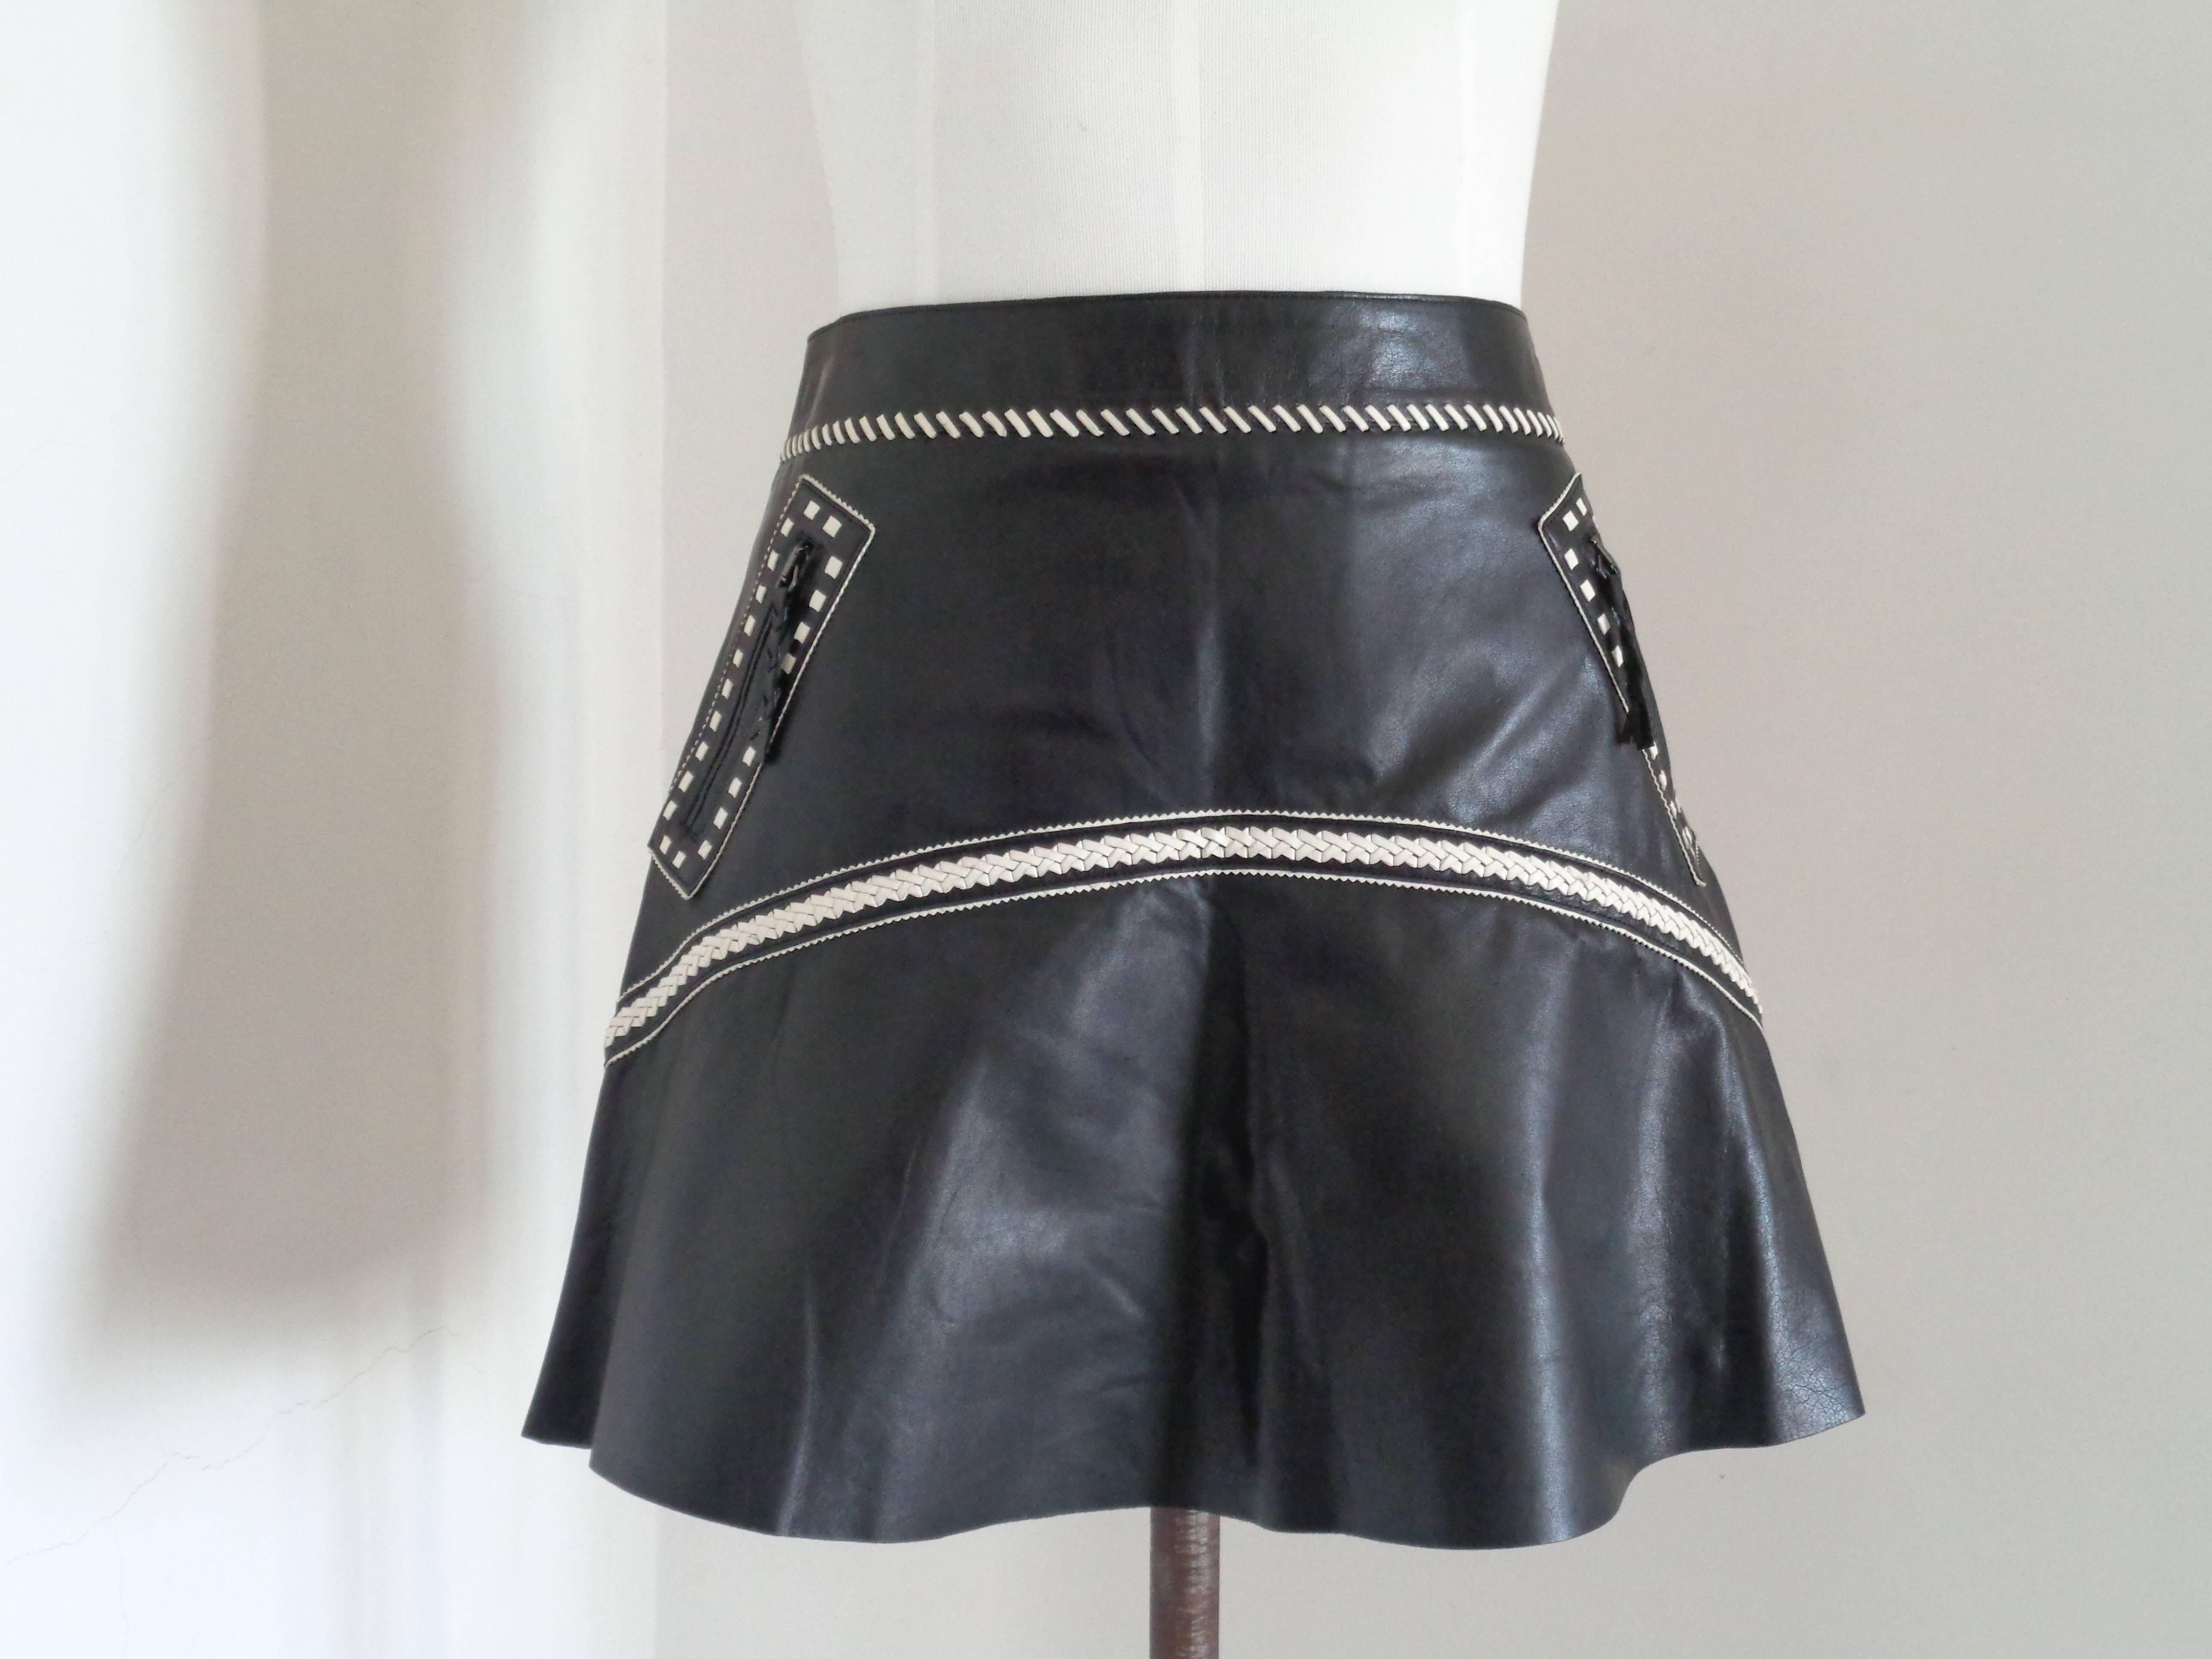 Roberto Cavalli Black Cream Leather Skirt NWOT

Totally made in italy in italian size range 40 